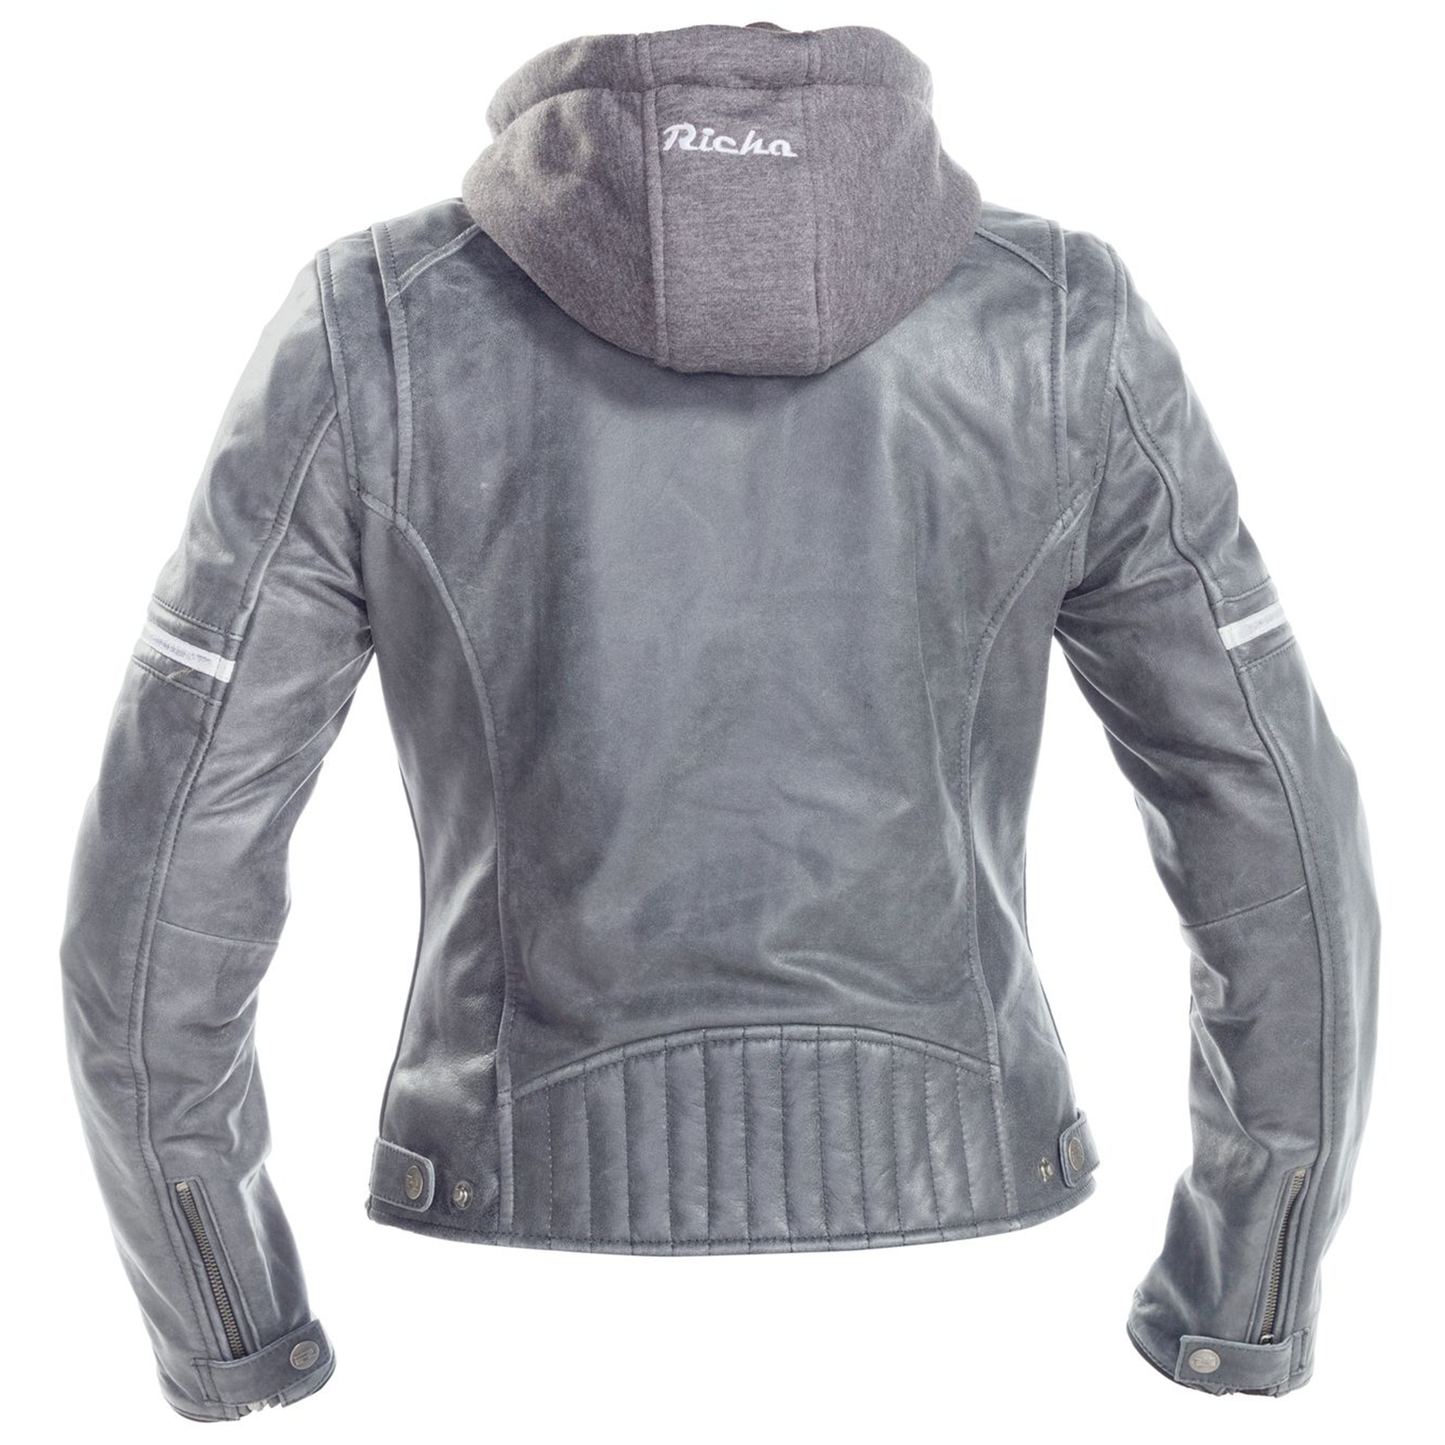 Richa Toulon 2 Ladies Leather Jacket - Grey